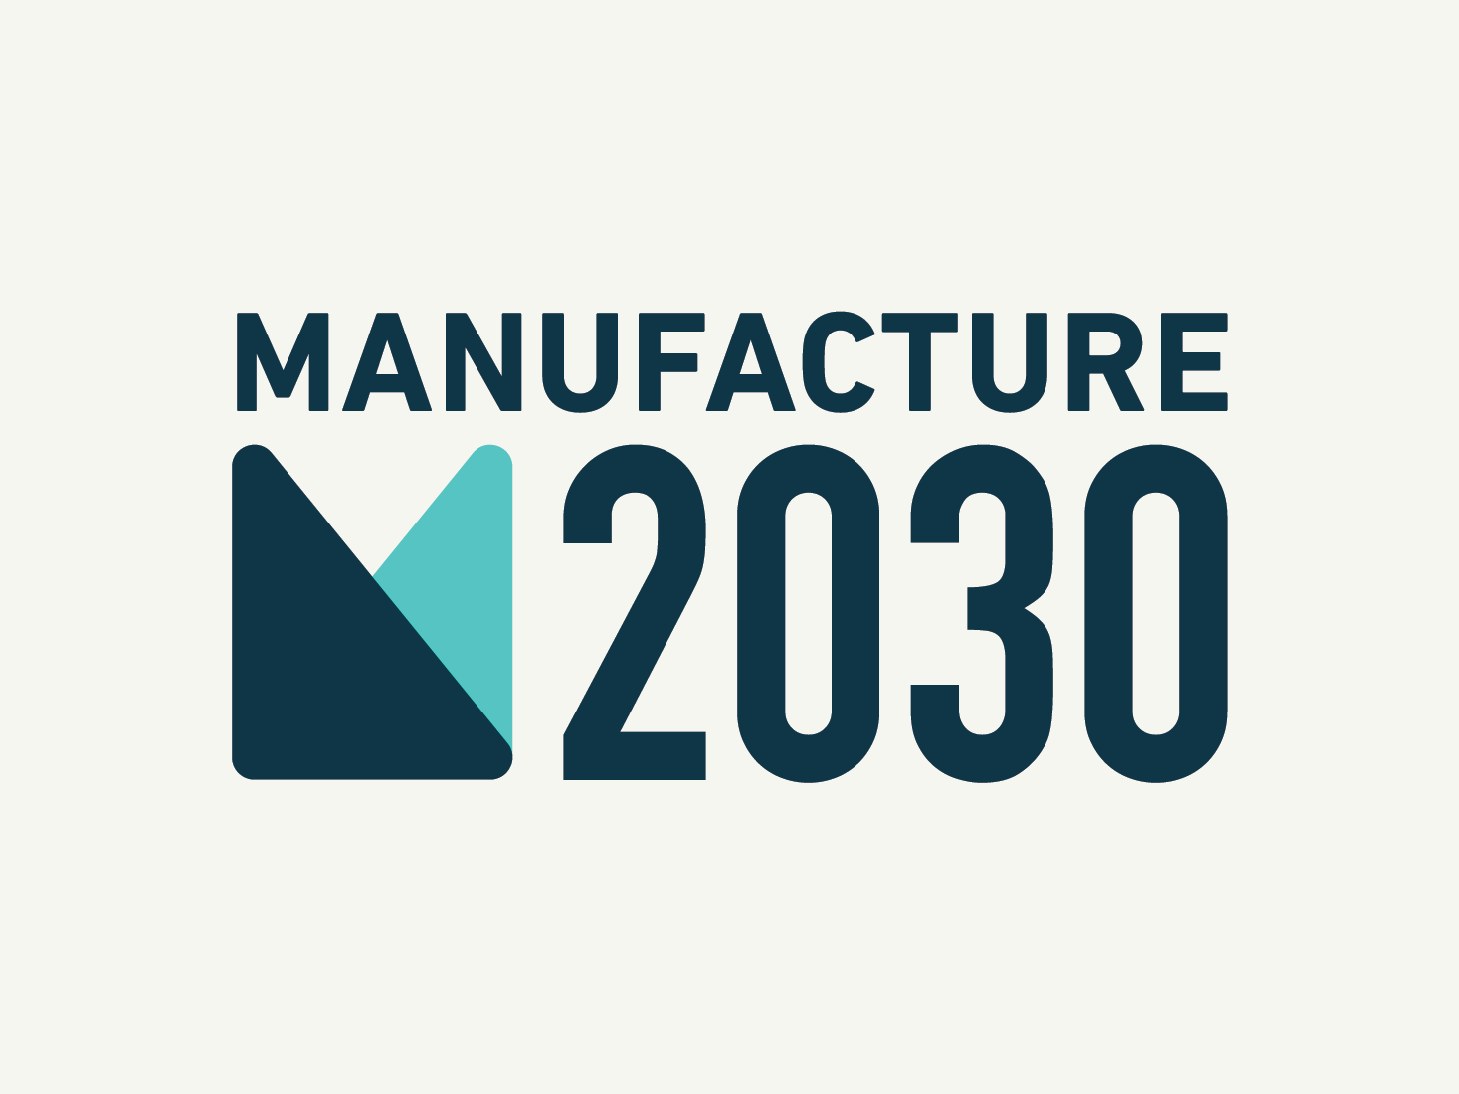 Manufacture 2030 logo on cream background